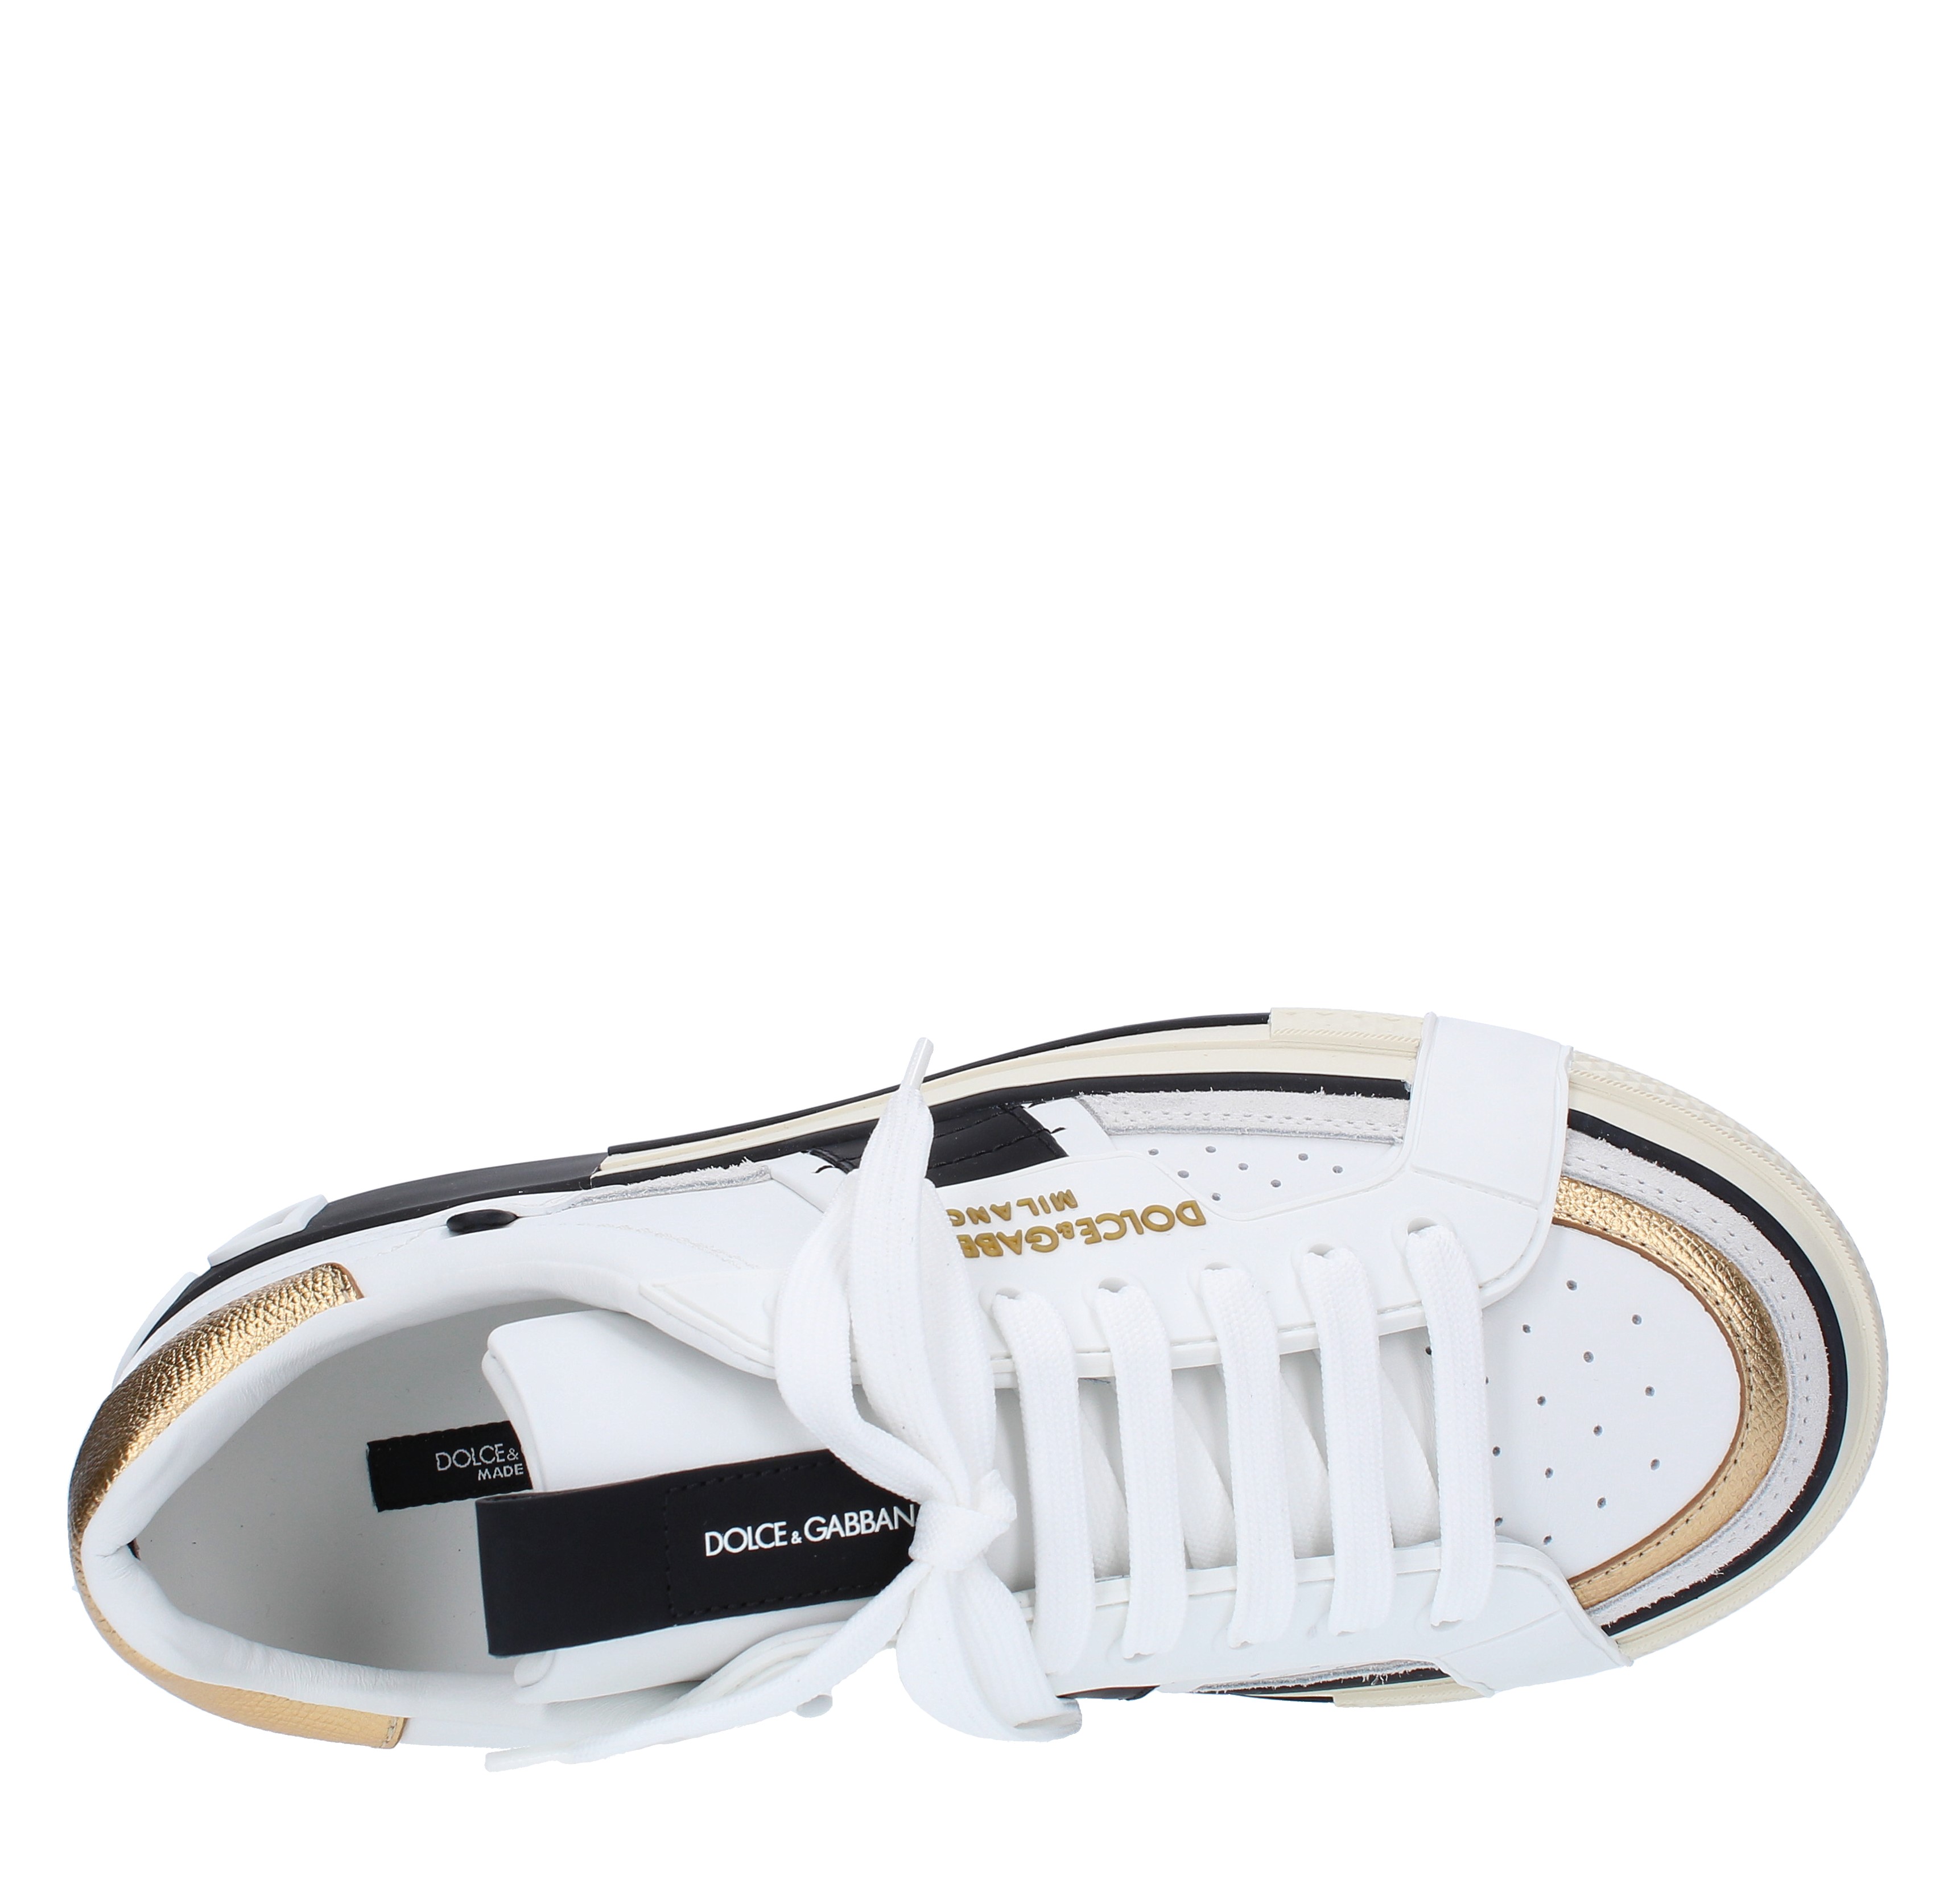 Sneakers DOLCE & GABBANA 2.ZERO SNK in pelle - DOLCE&GABBANA - Ginevra  calzature